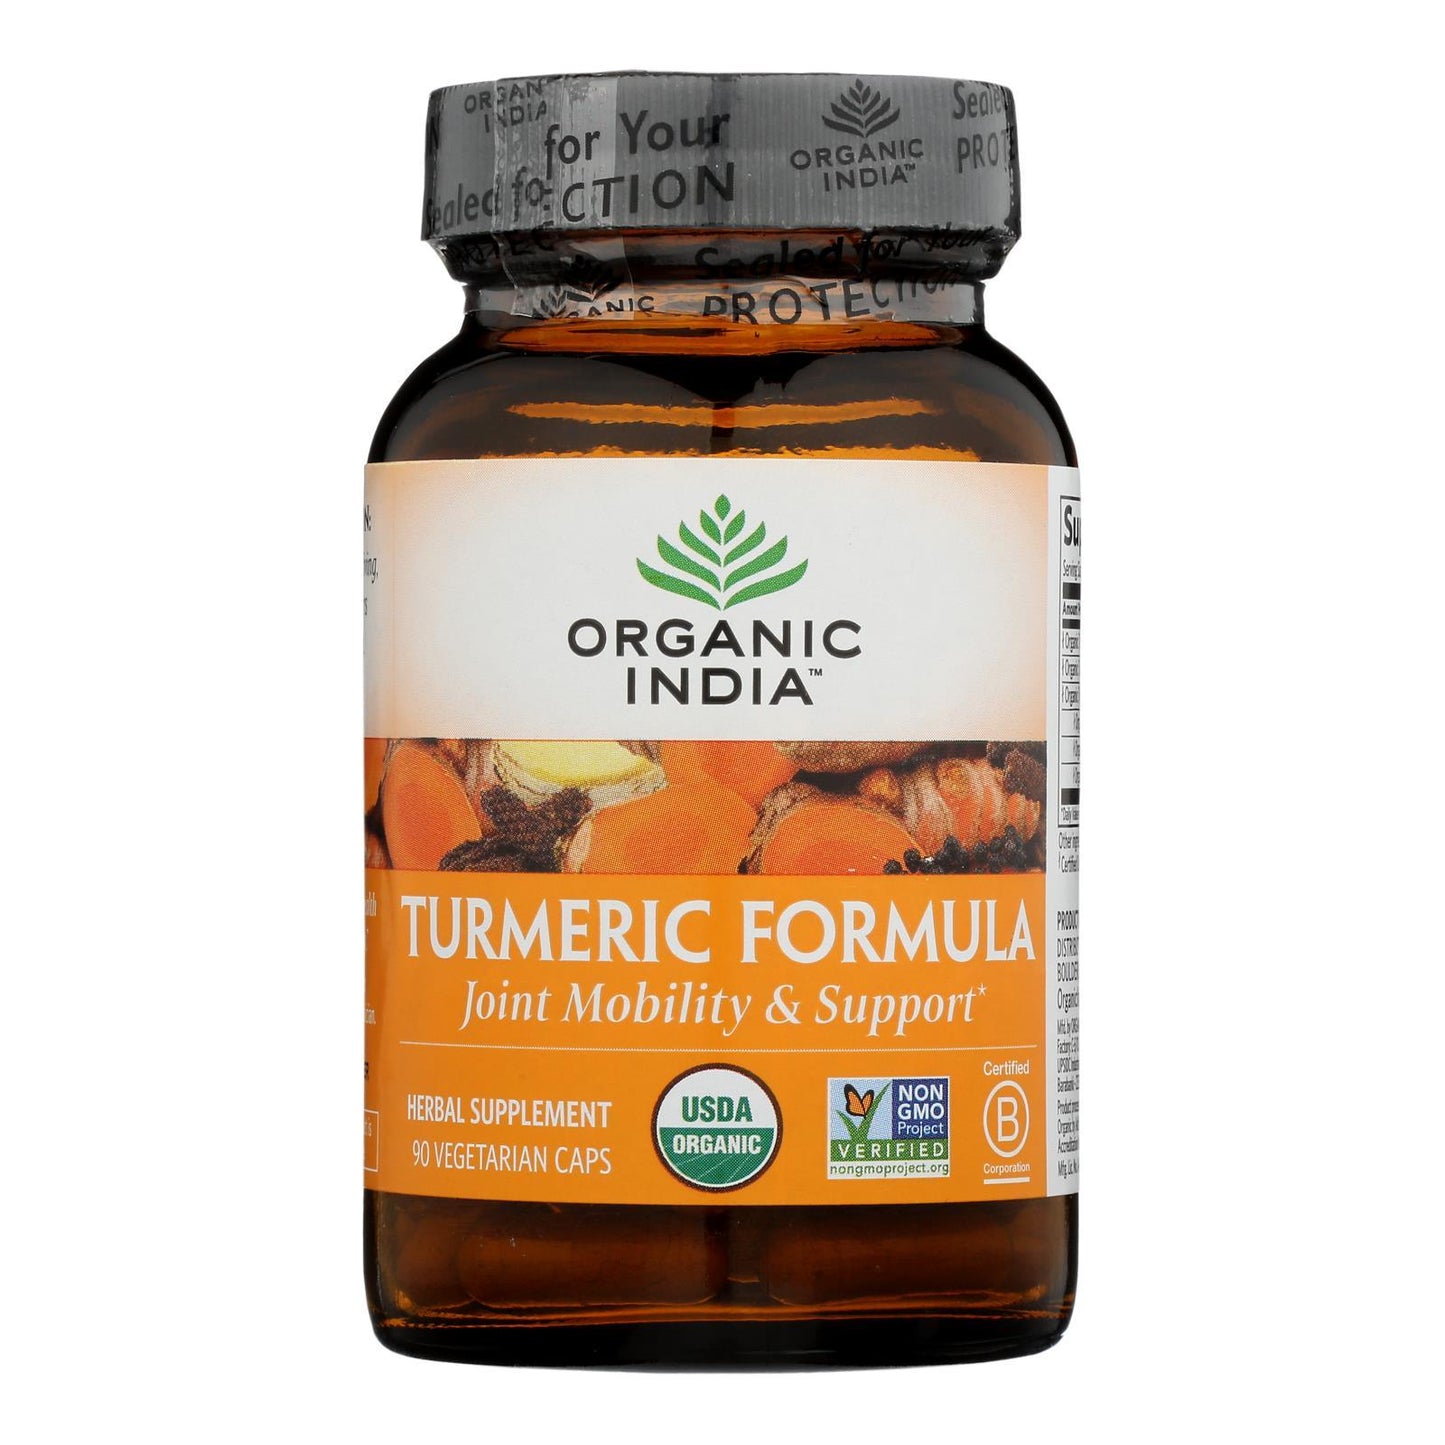 Organic India Wellness Supplements, Turmeric Formula - 1 Each - 90 Vcap